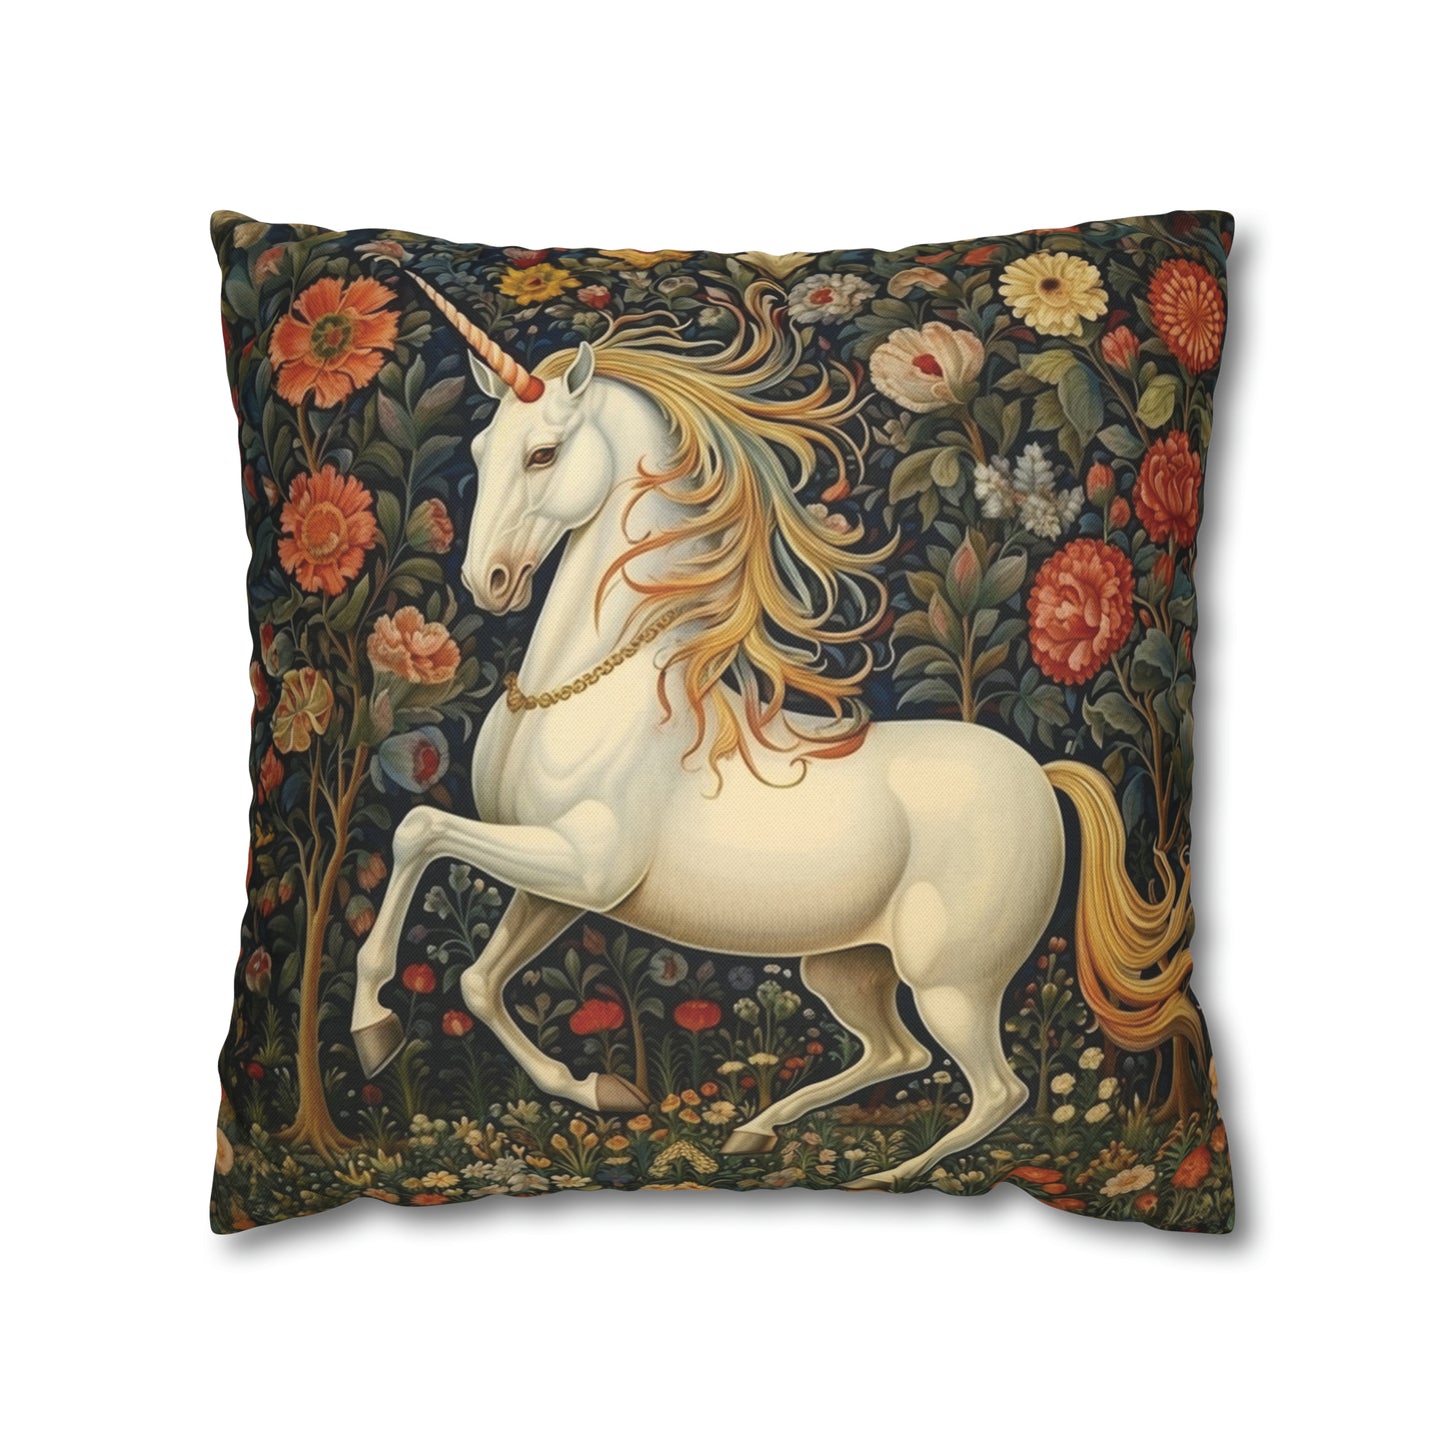 Unicorn Floral Garden William Morris Inspired Pillow